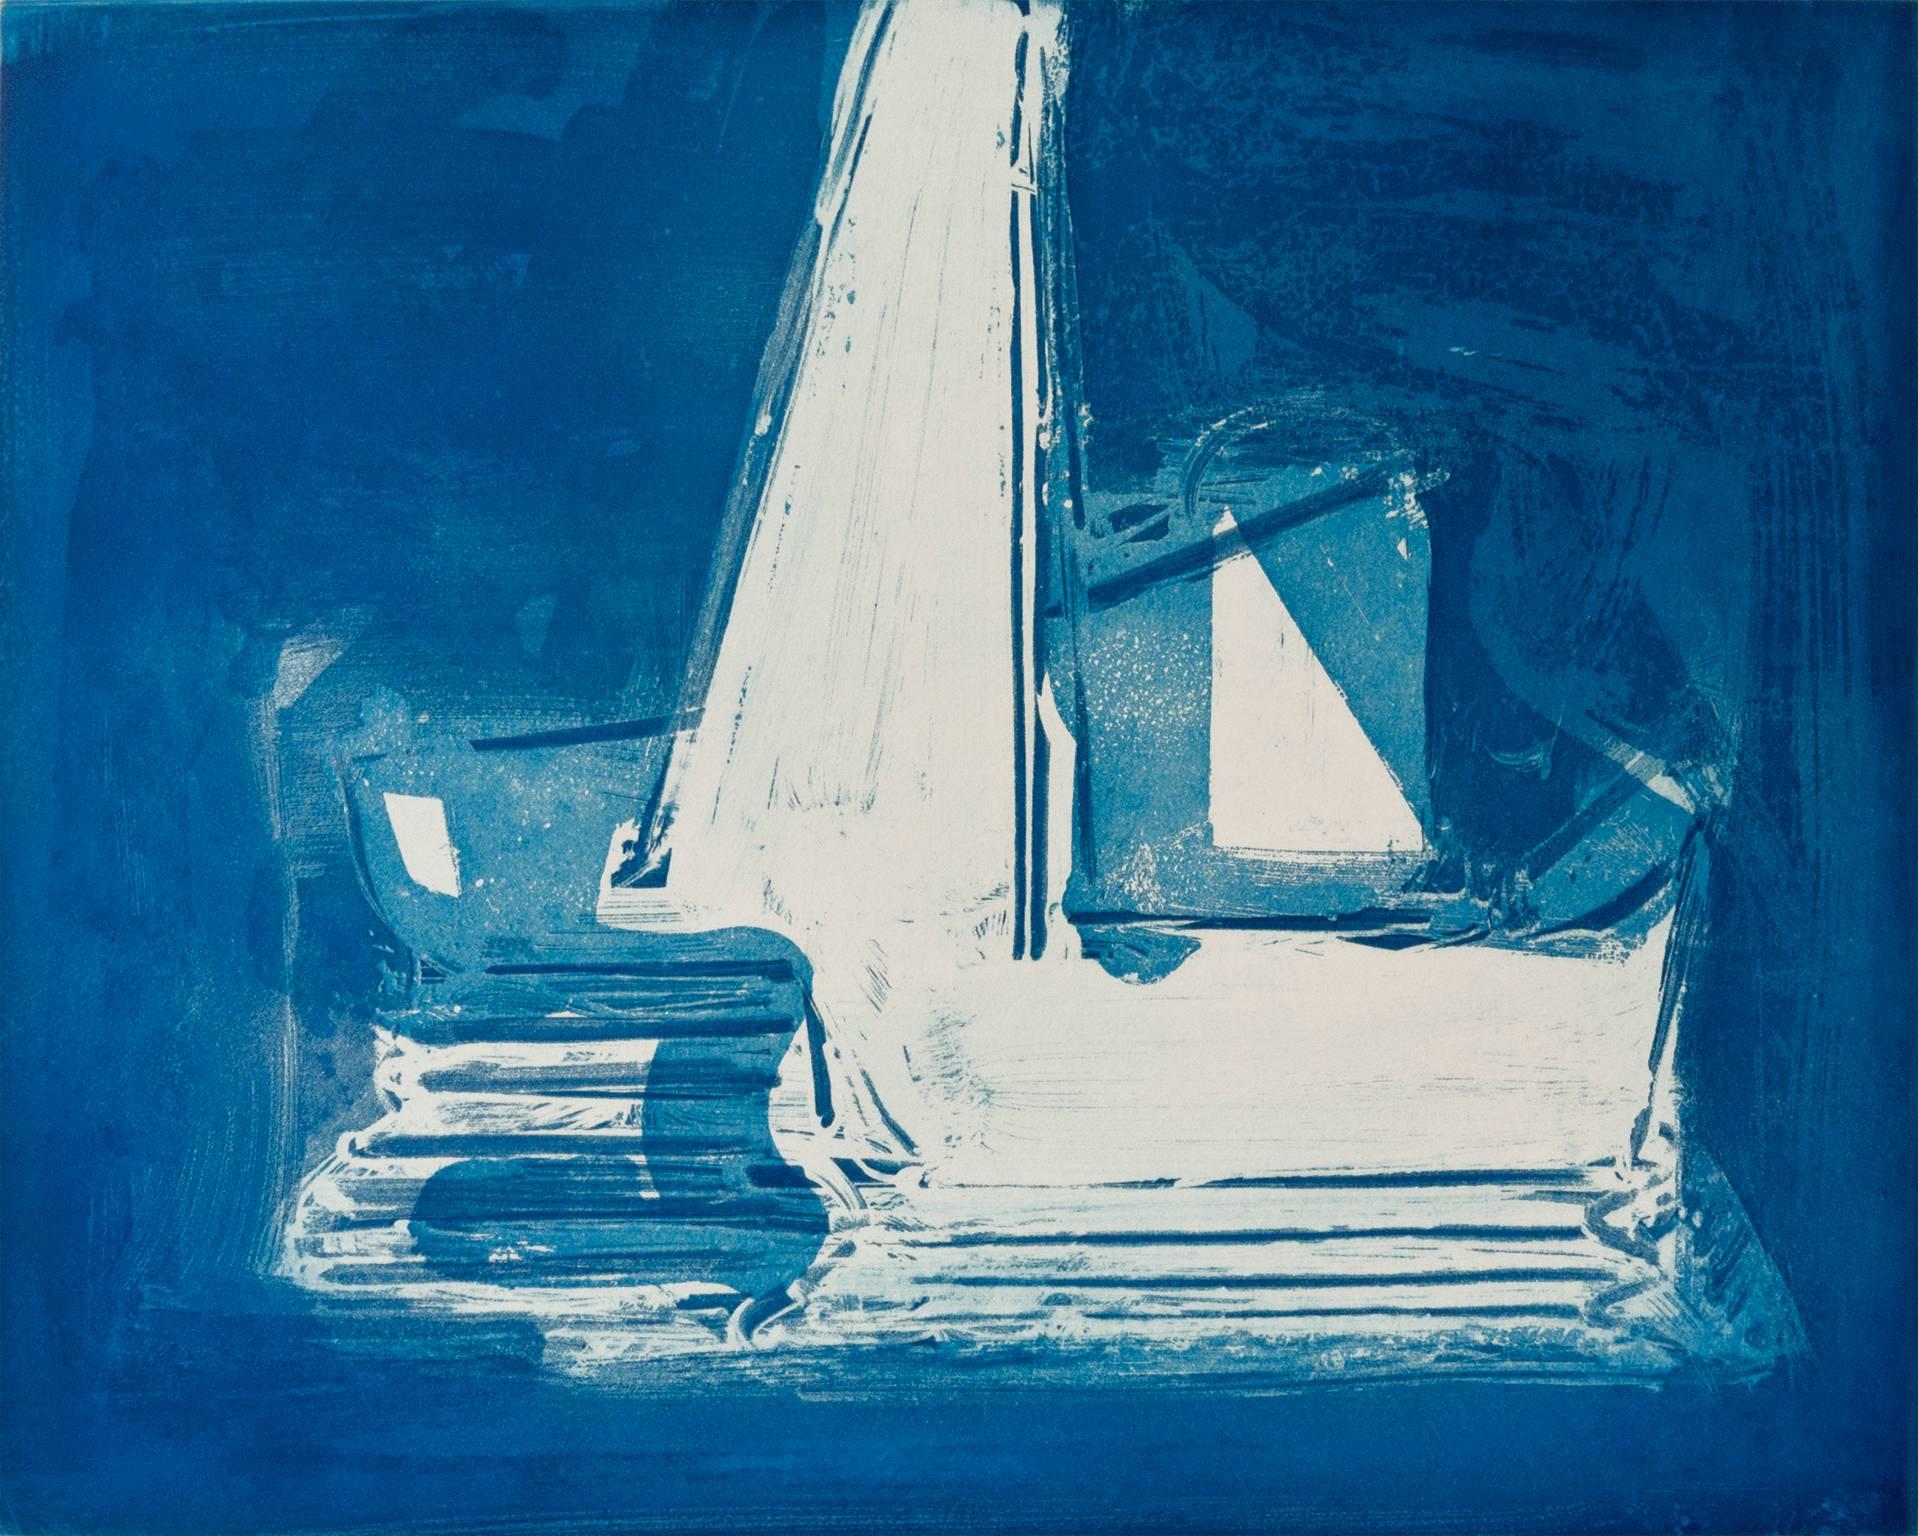 Paul Resika Landscape Print - "Two Sails", abstract seascape etching aquatint print, Cape Cod, blue tones.